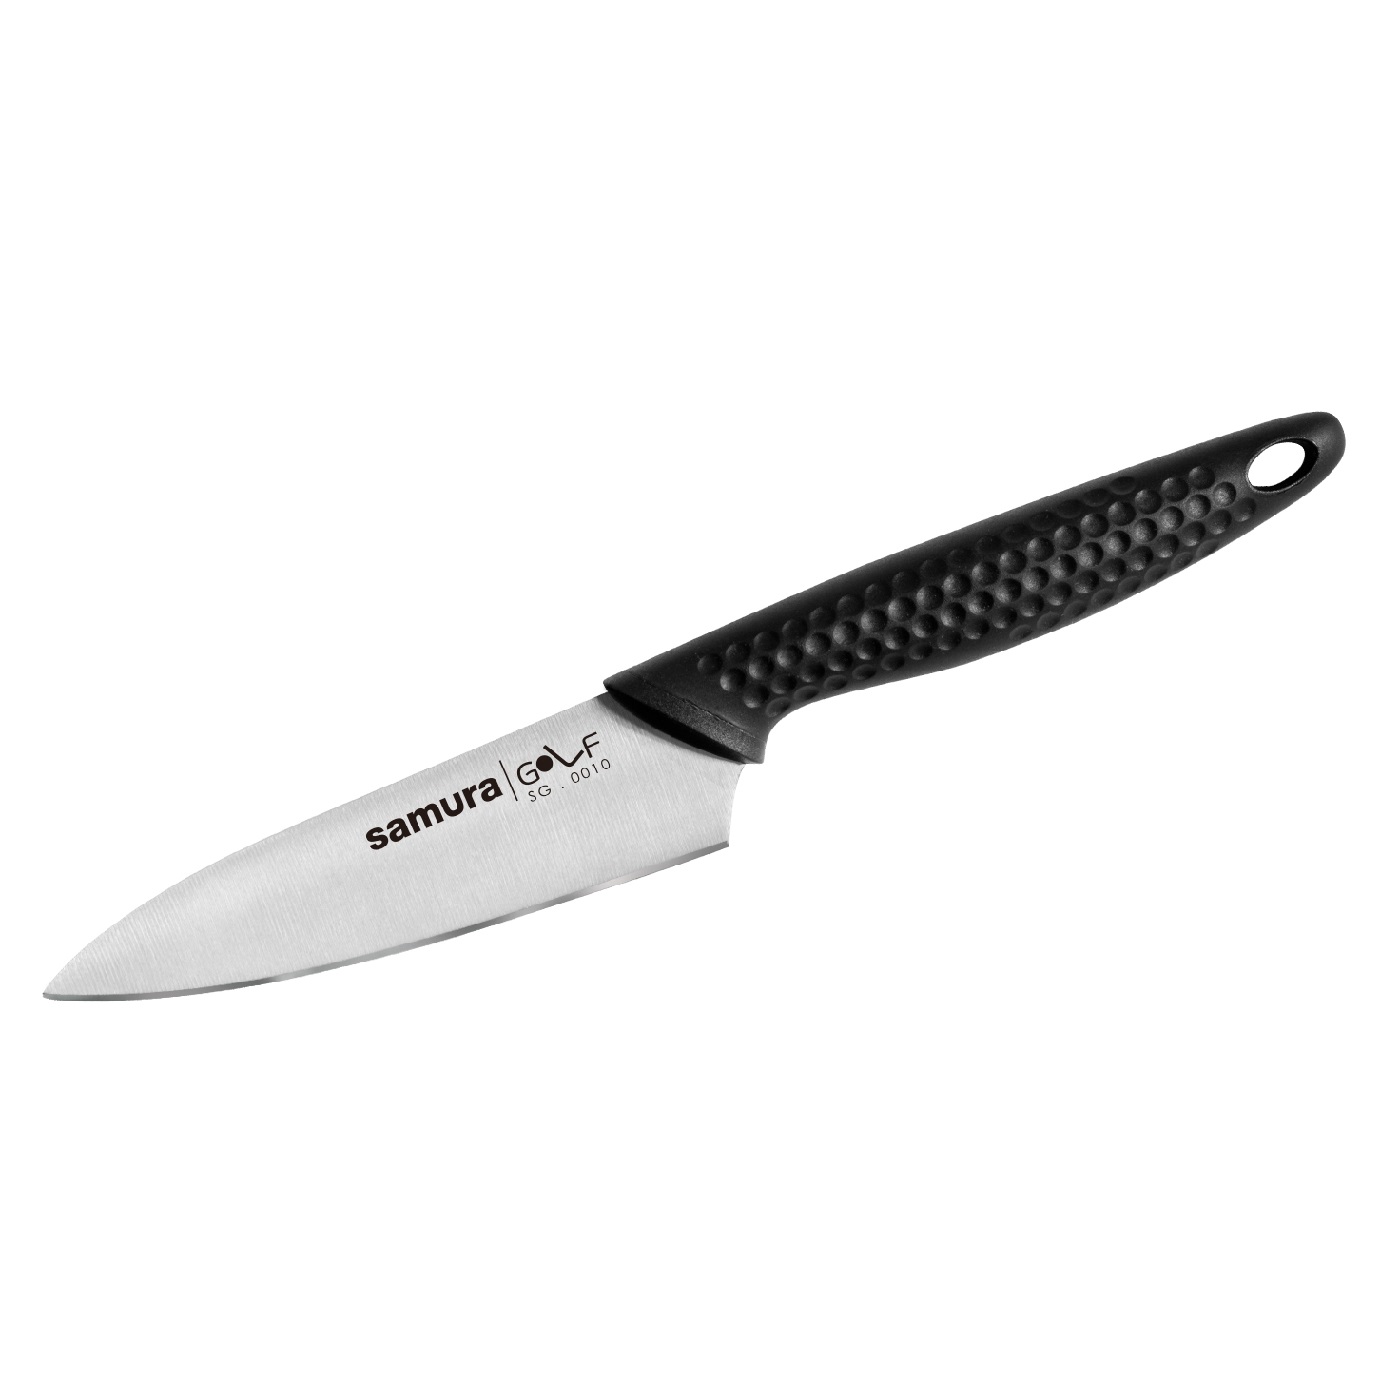 Нож Samura овощной Golf, 9,8 см, AUS-8 нож samura blacksmith накири 16 8 см aus 8 микарта